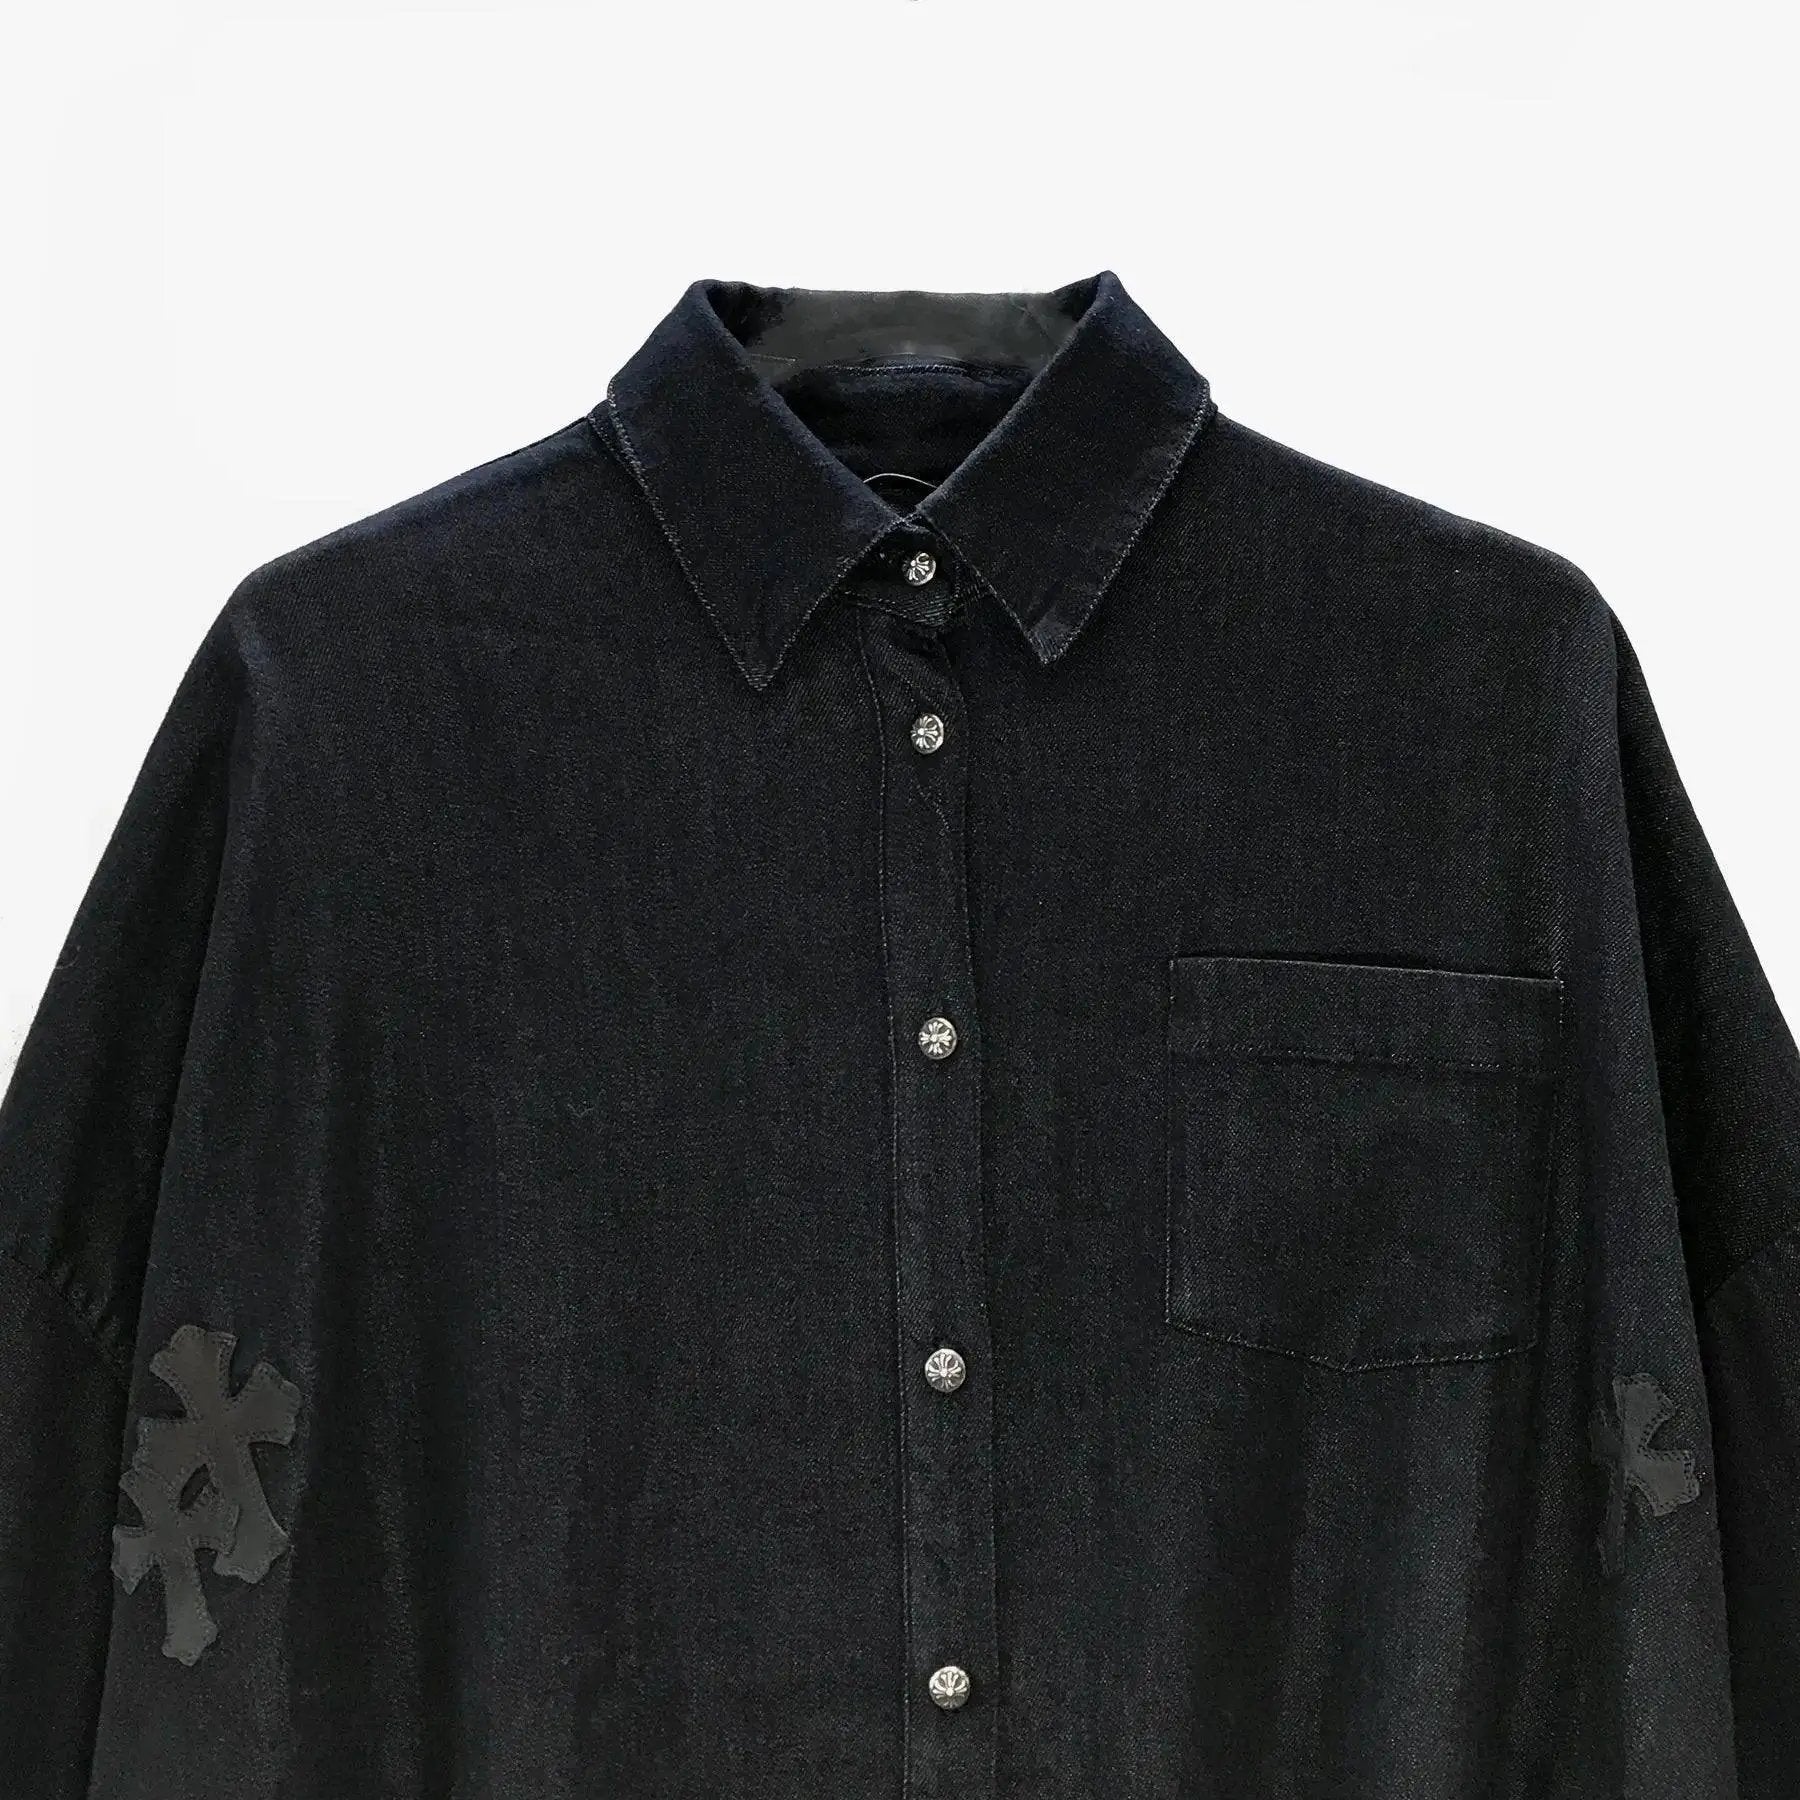 Chrome Hearts Soft Denim Black Leather Cross Shirt - SHENGLI ROAD MARKET